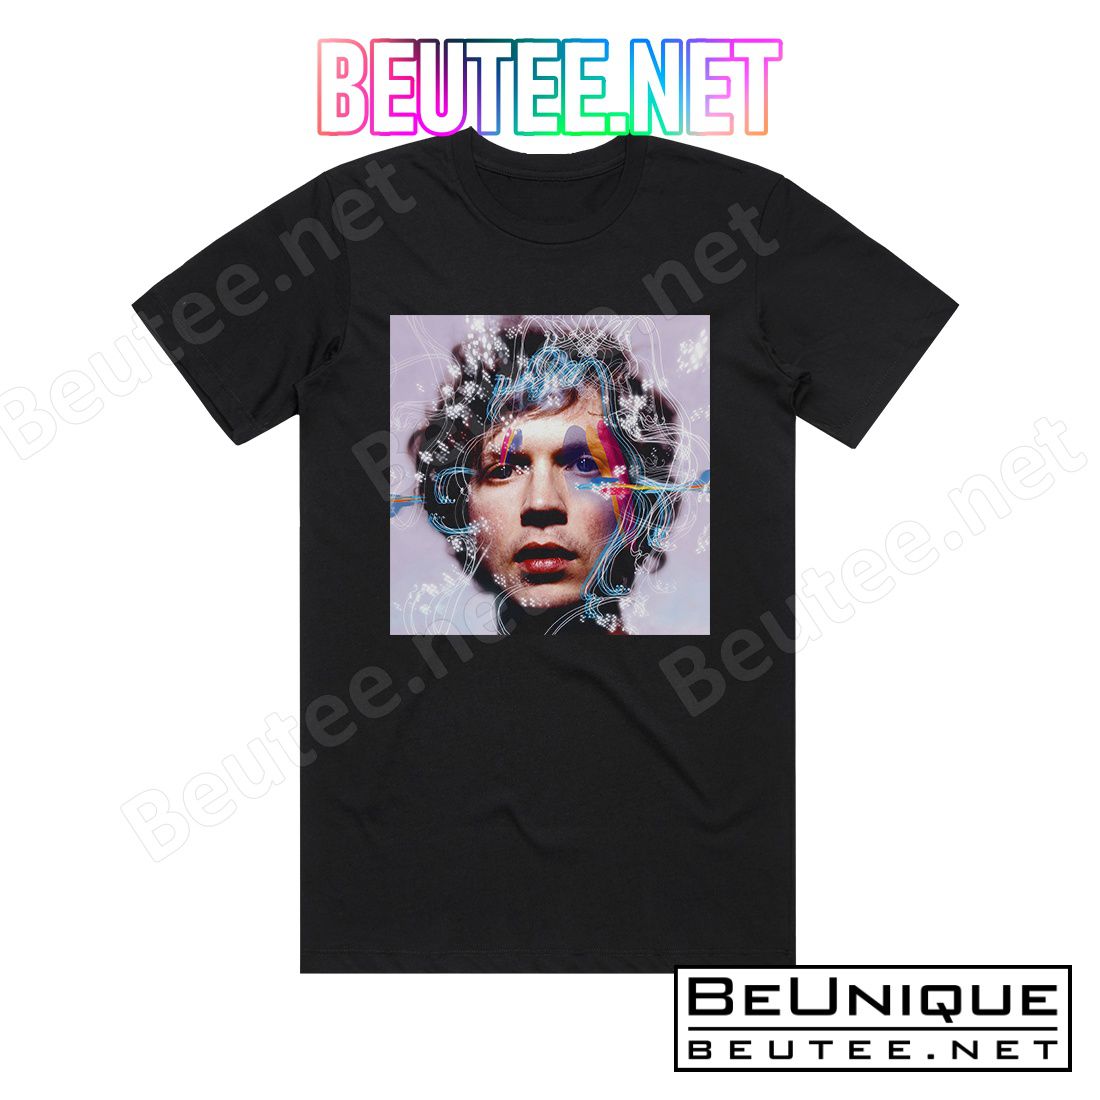 Beck Sea Change 3 Album Cover T-Shirt